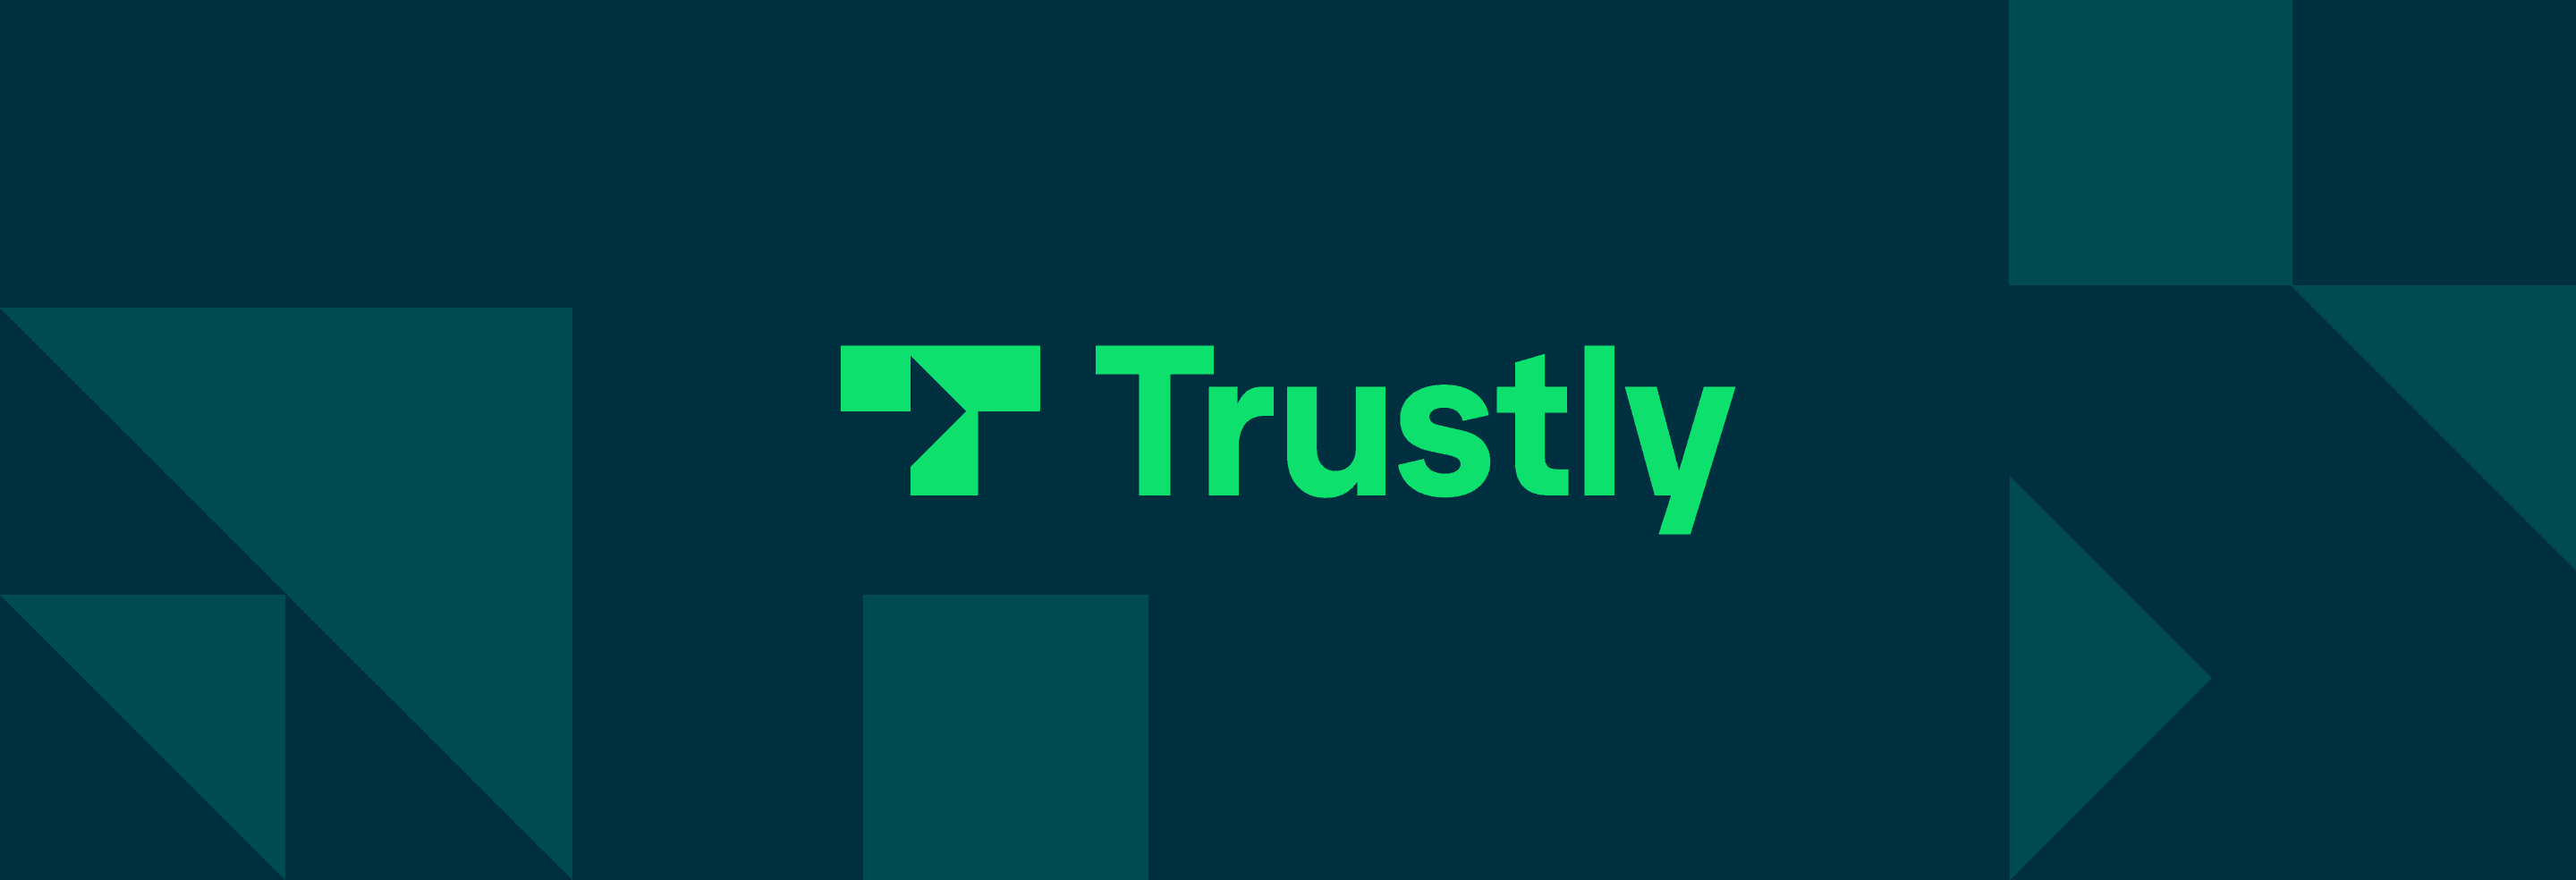 trustly_full